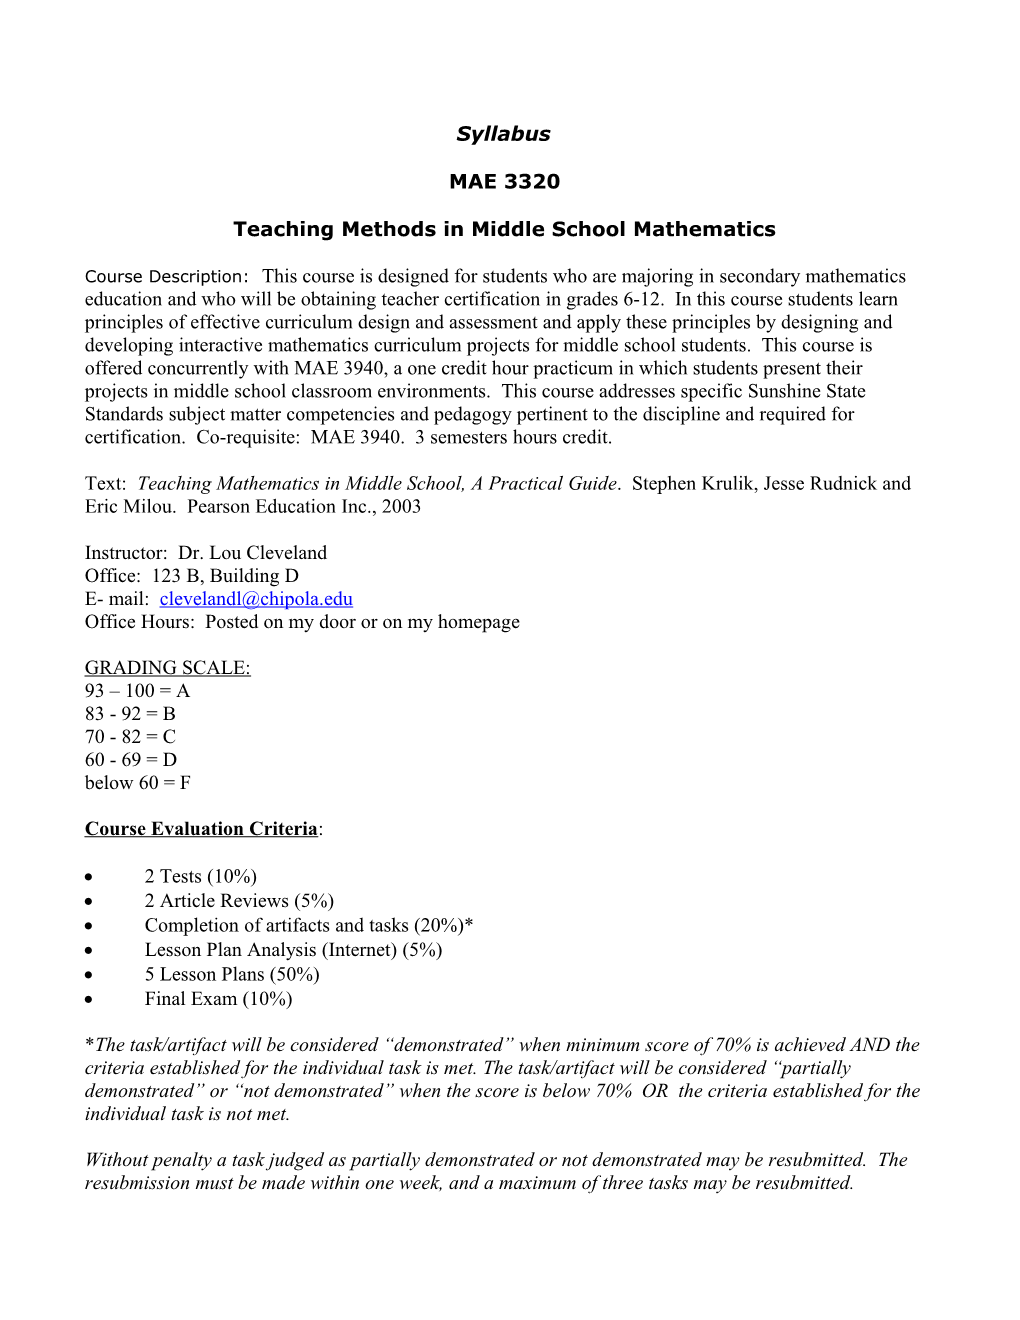 Teaching Methods in Middle School Mathematics